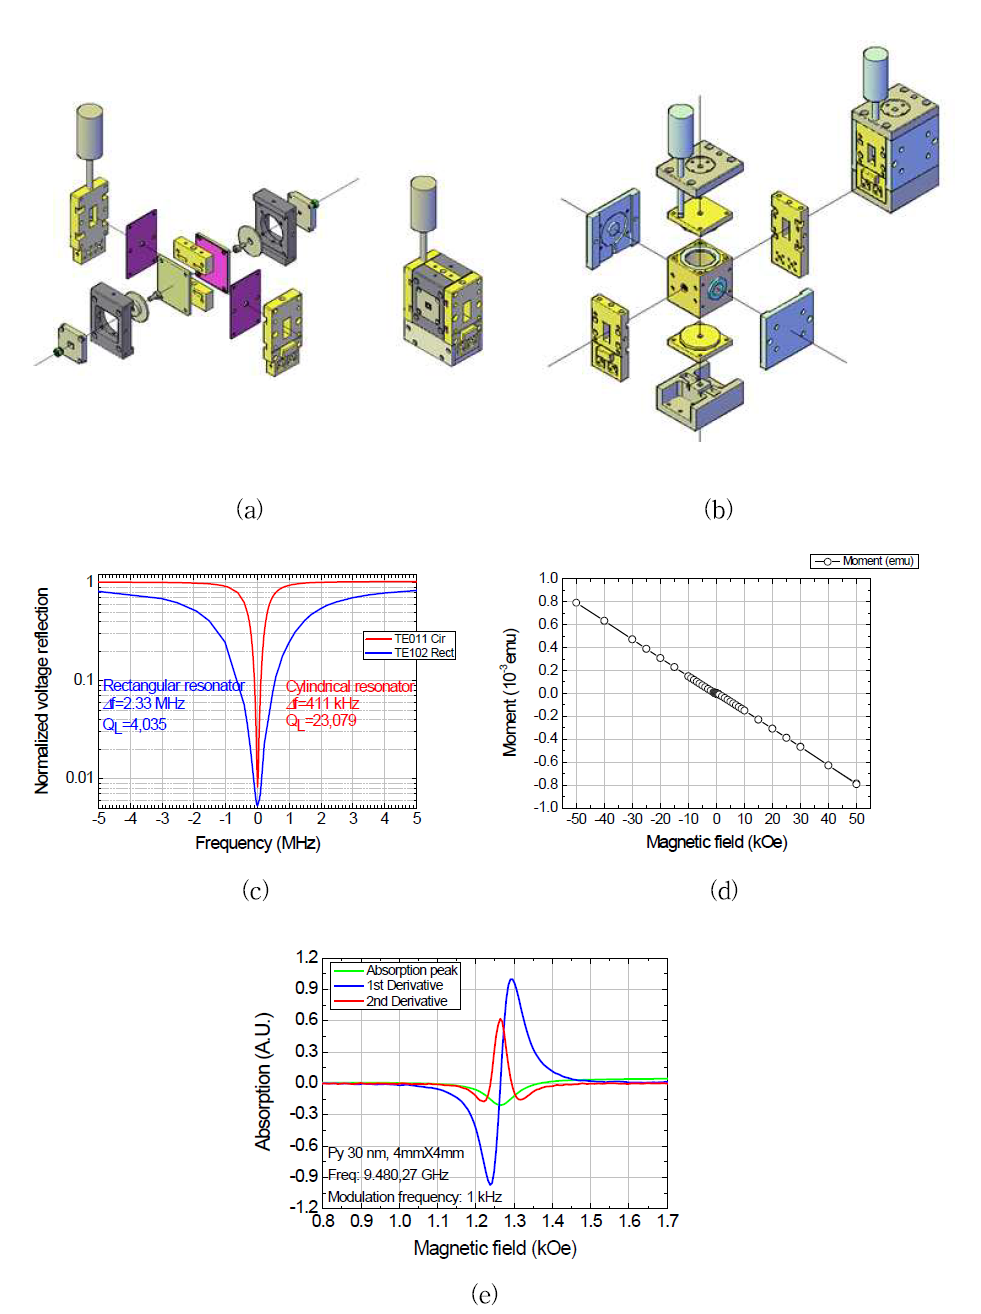 (a) TE011 모드 각형 공명기, (b) TE102 모드 원형 공명기, (c) 모드 곡선, (d) 공명기 재료의 자화곡선, (e) Py 30 nm 박막의 강자성 공명 측정 결과